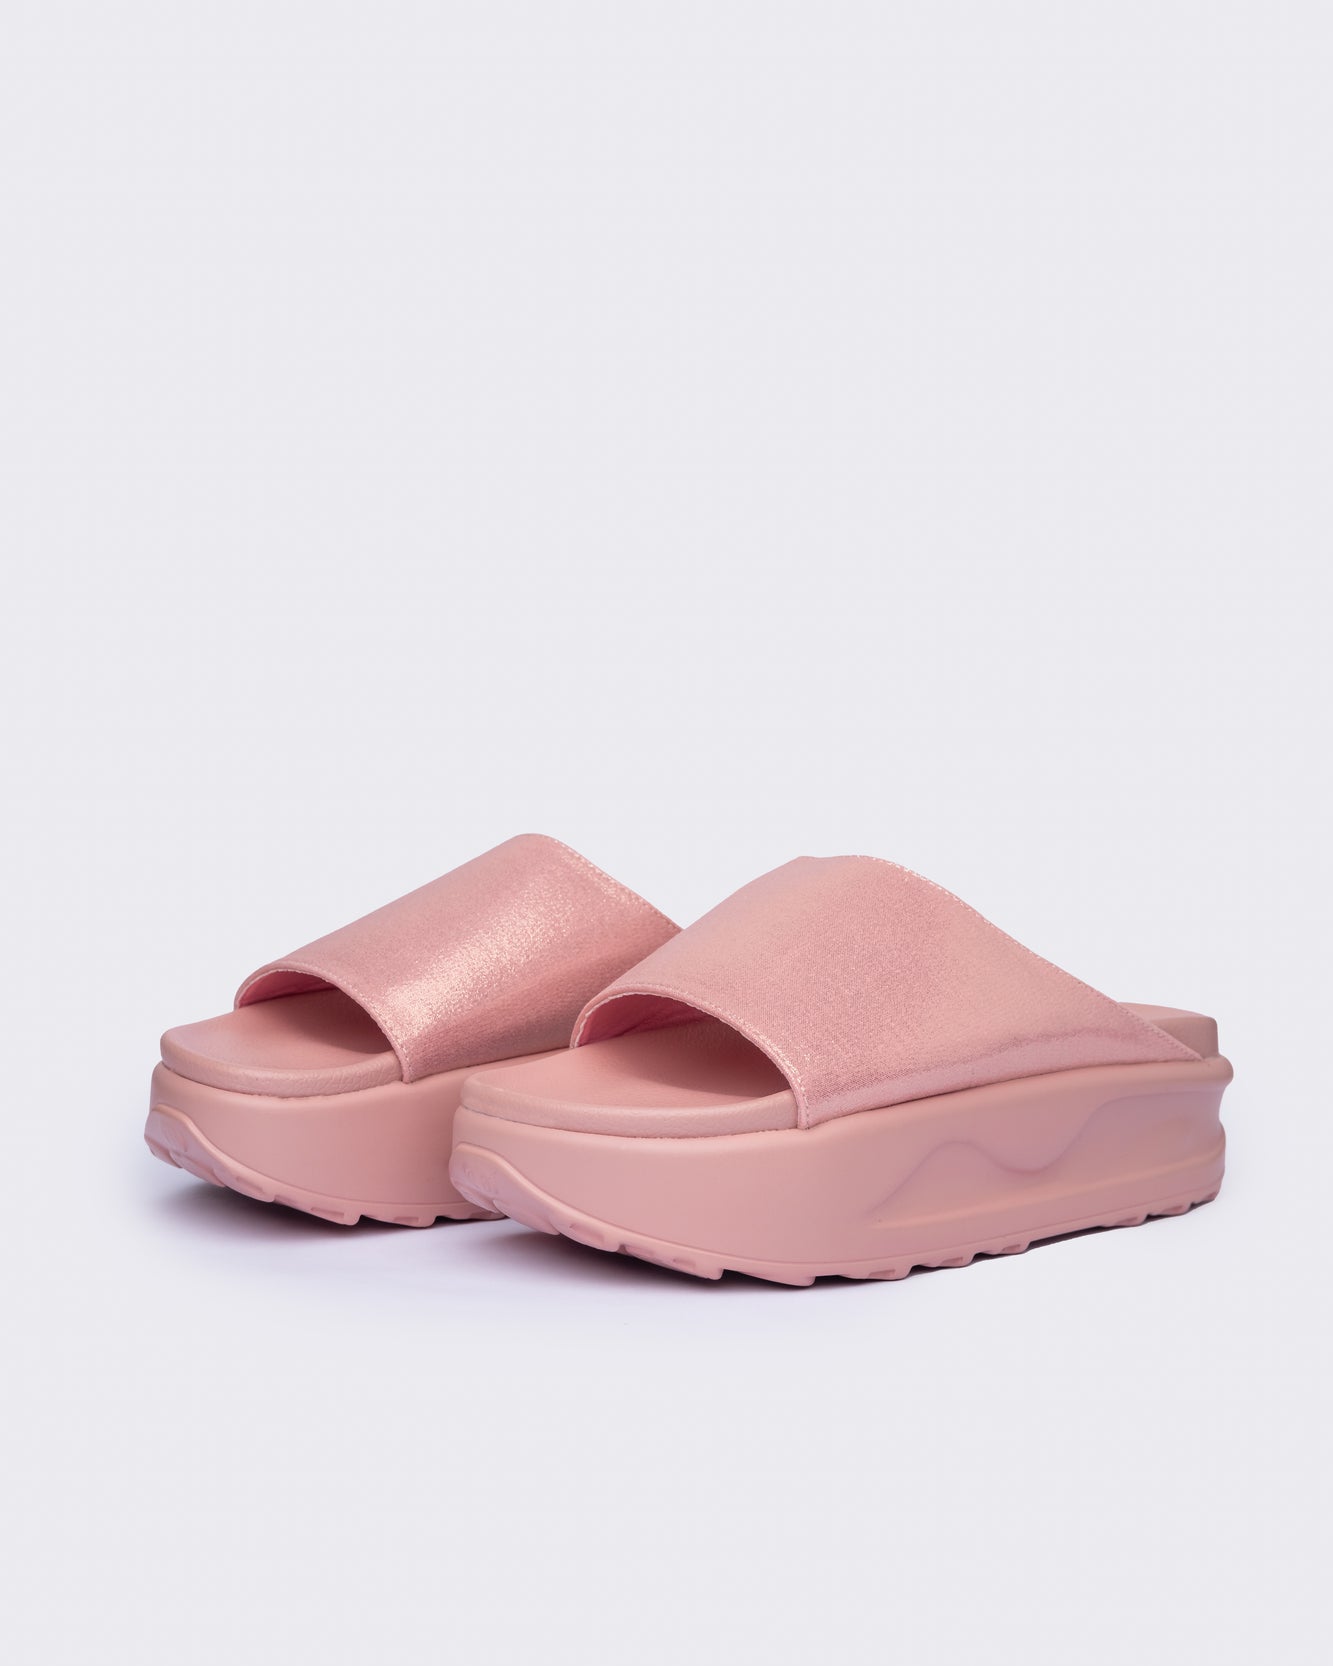 Slides de plataformas rosa